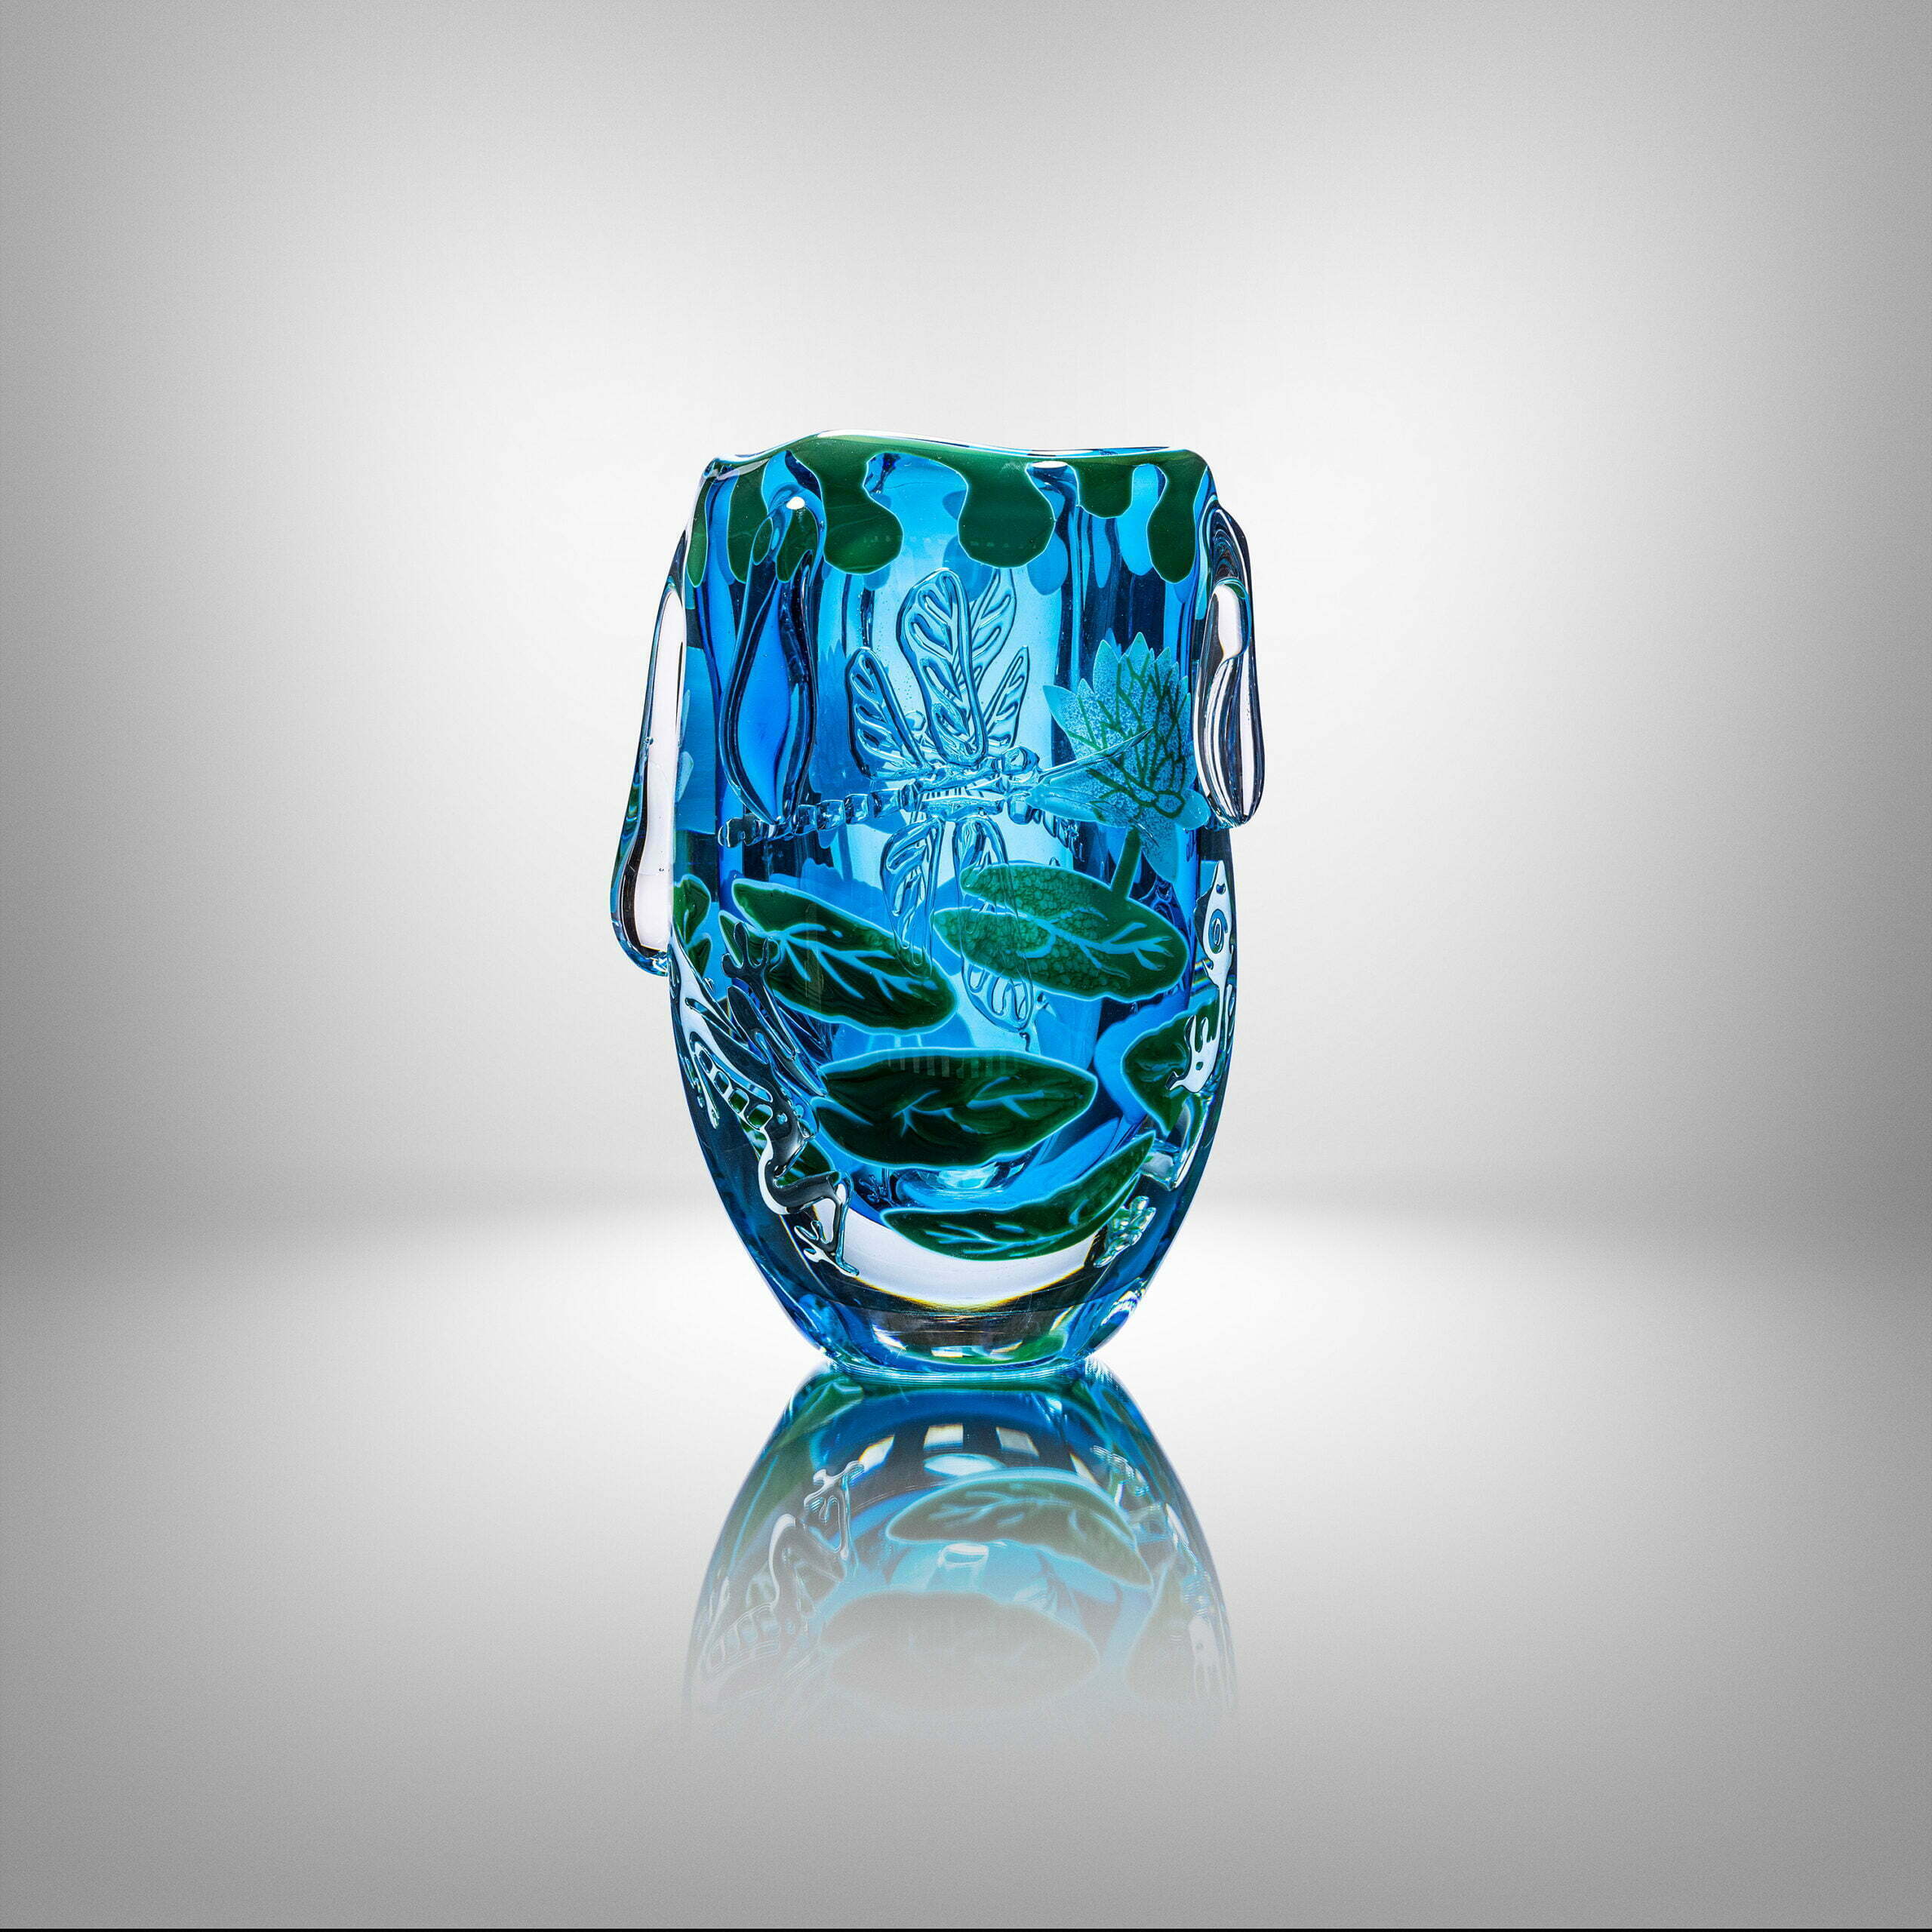 Mickejohan's kunstglas, Glasriket